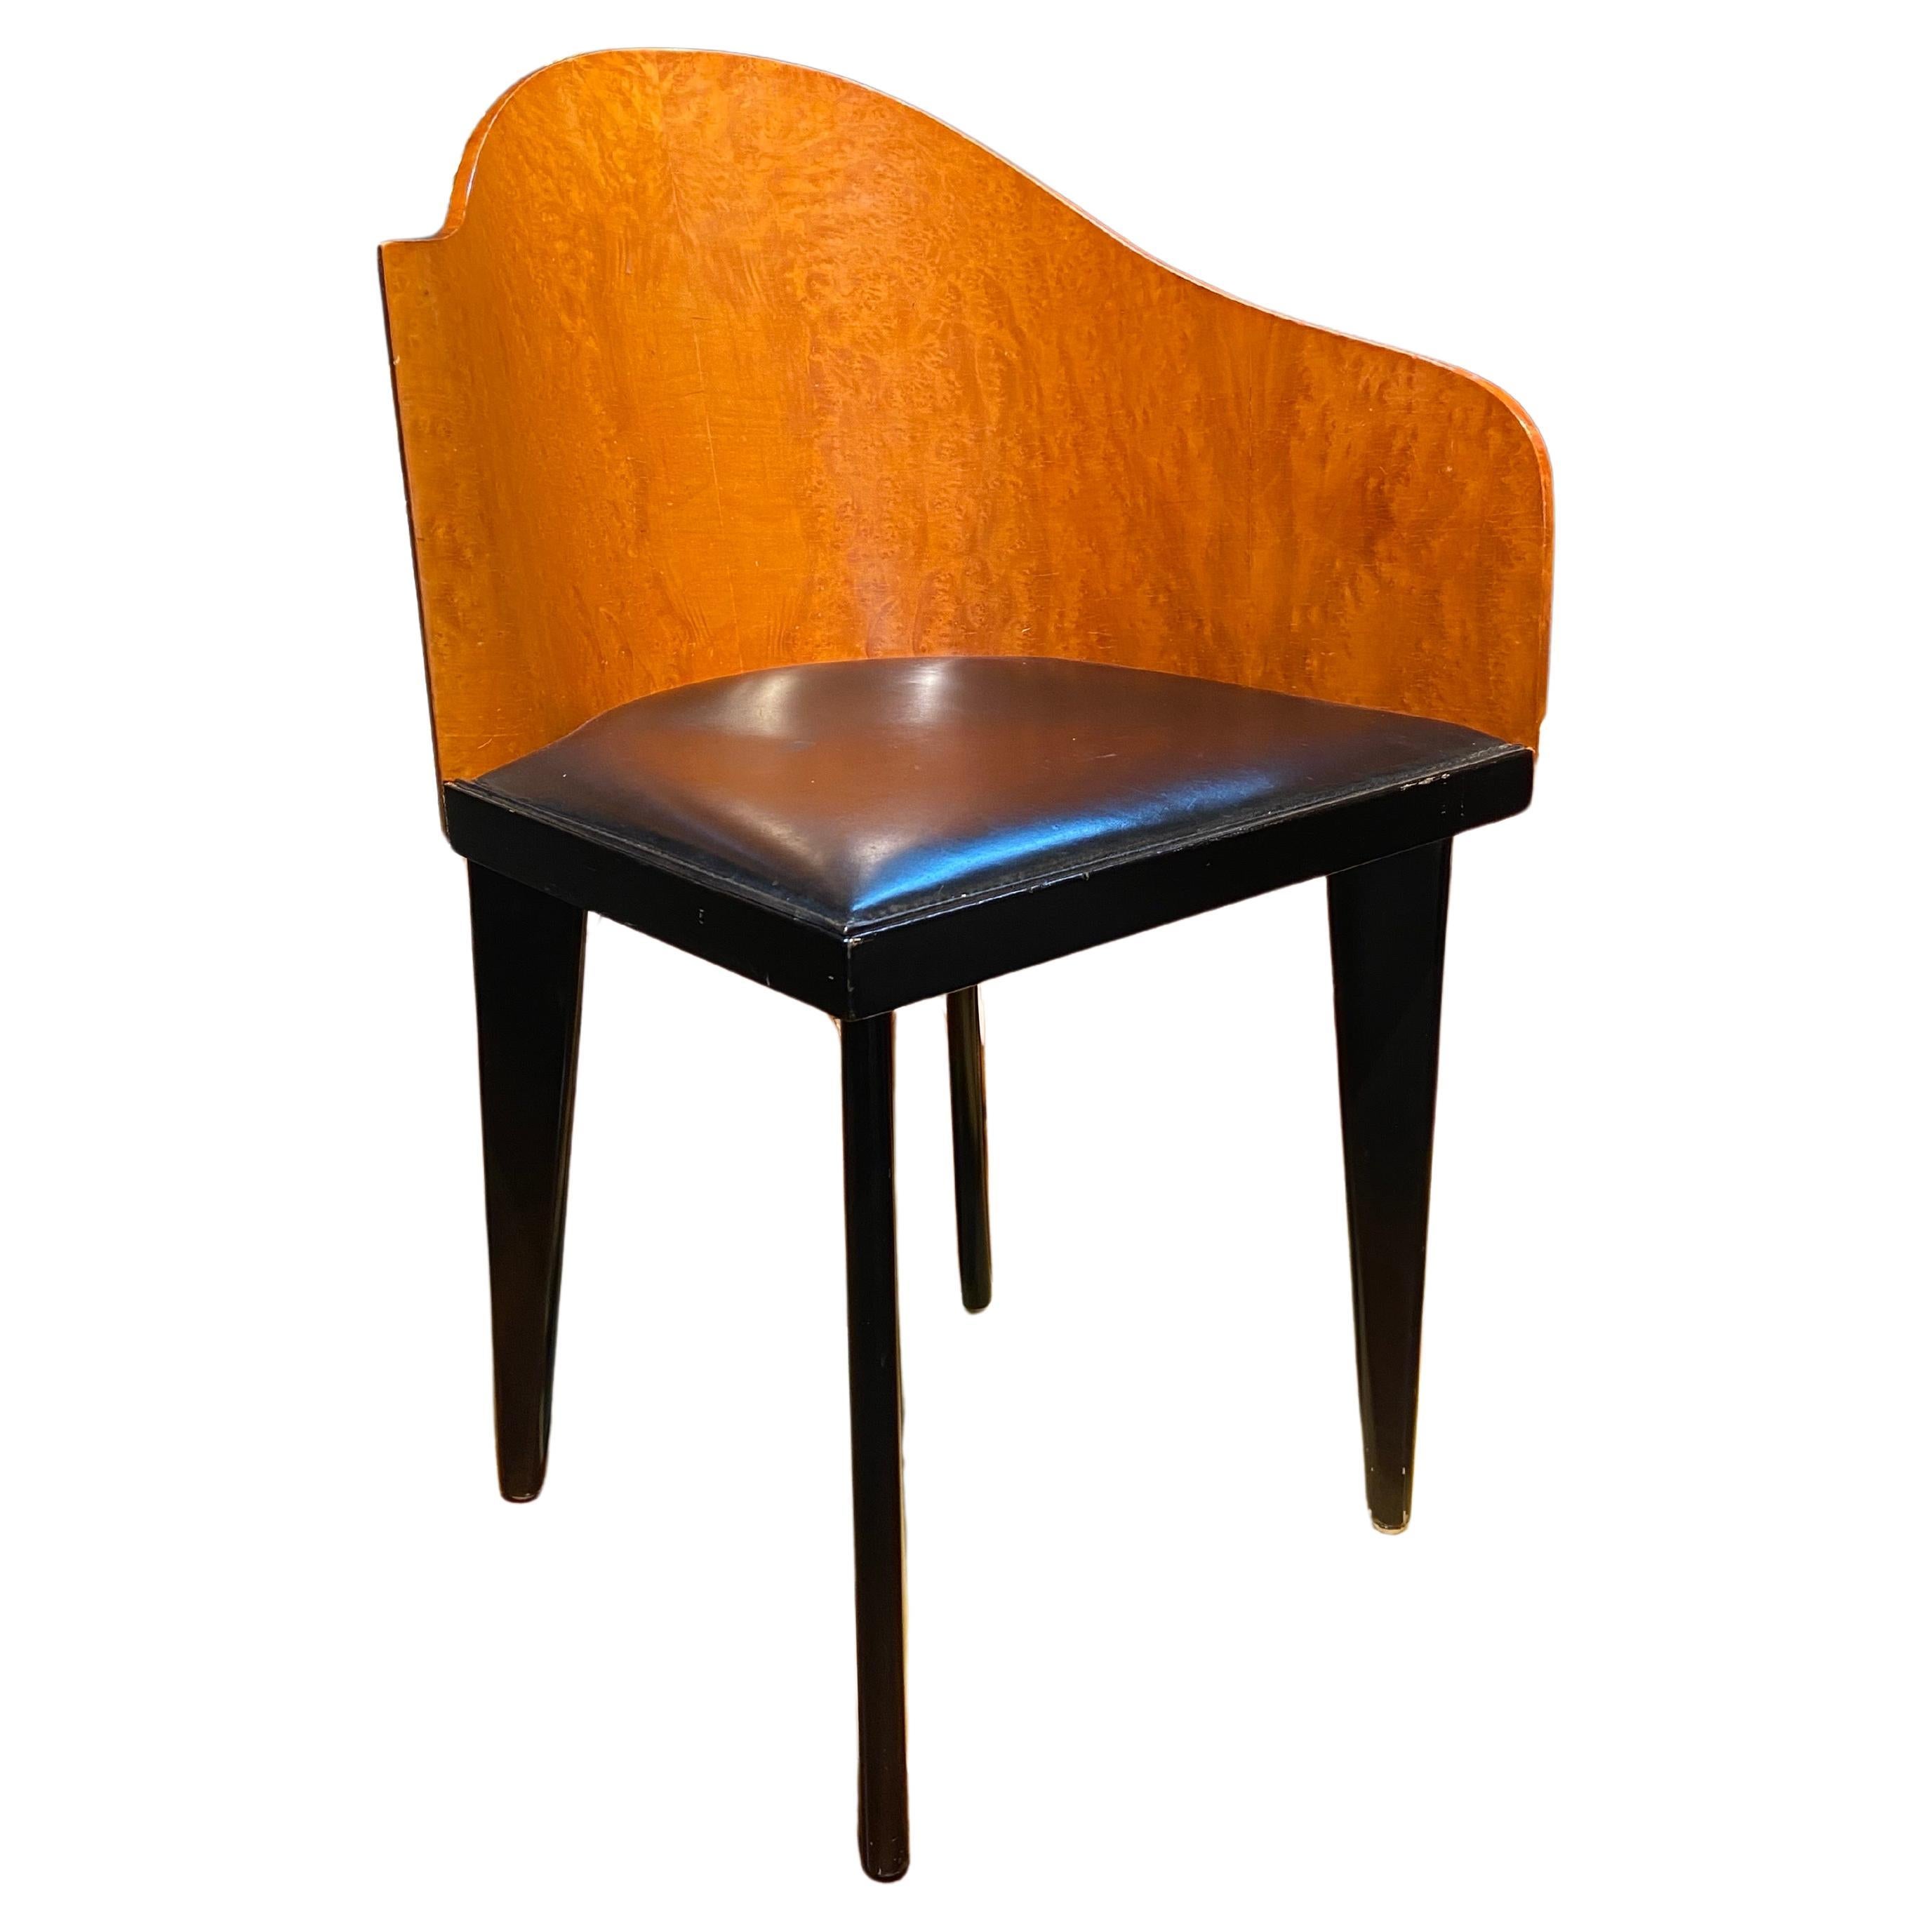 Italian Single Toscana Chair Designed by Piero Sartogo for Saporiti